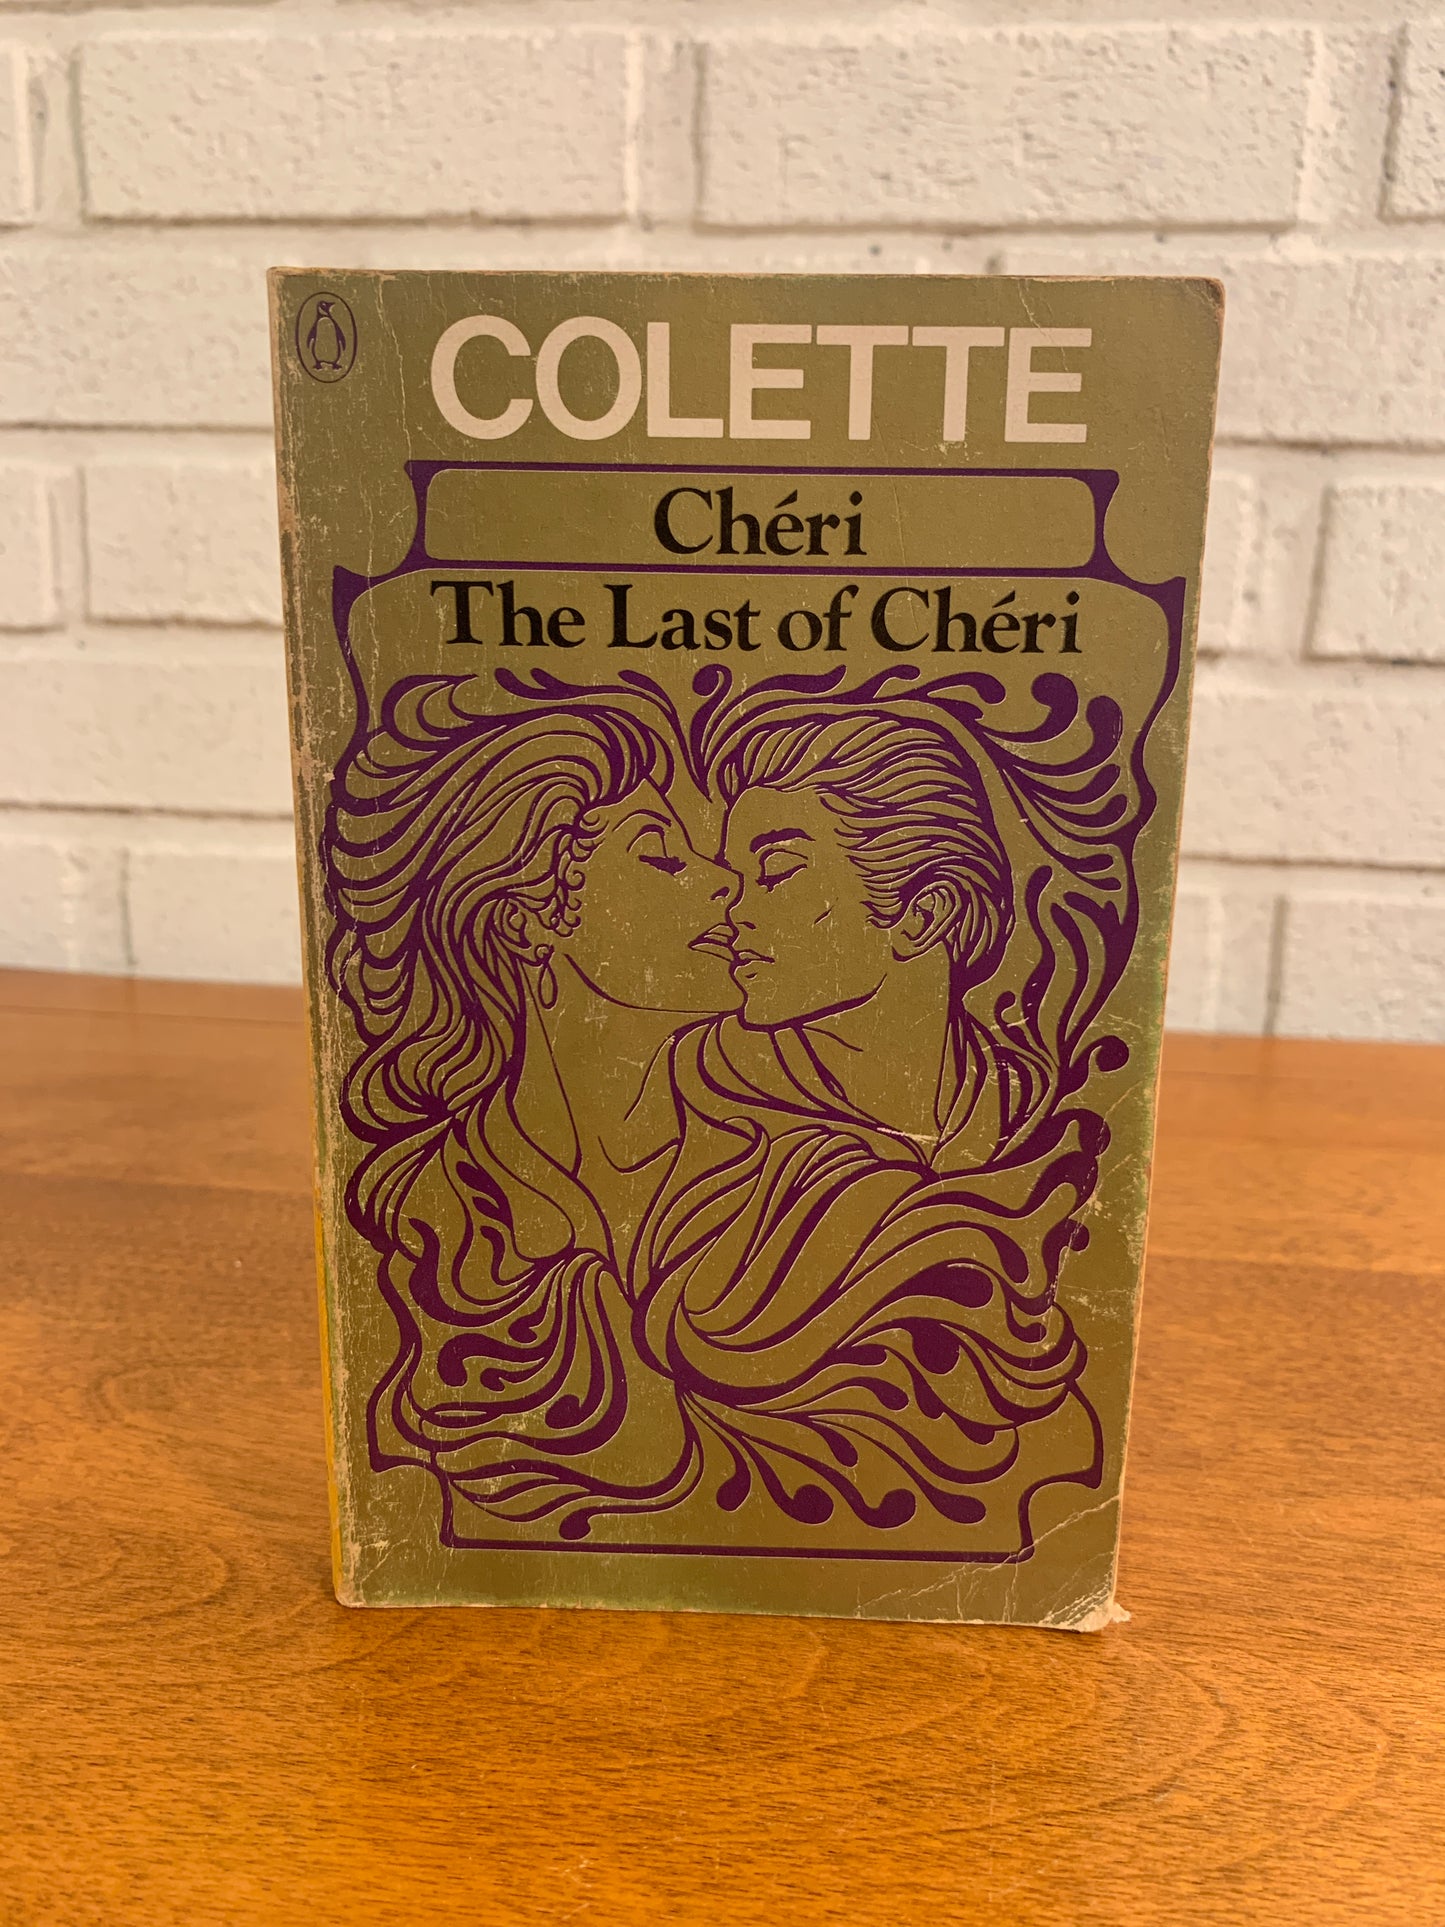 Cheri / The Last of Cheri by Colette [1974]